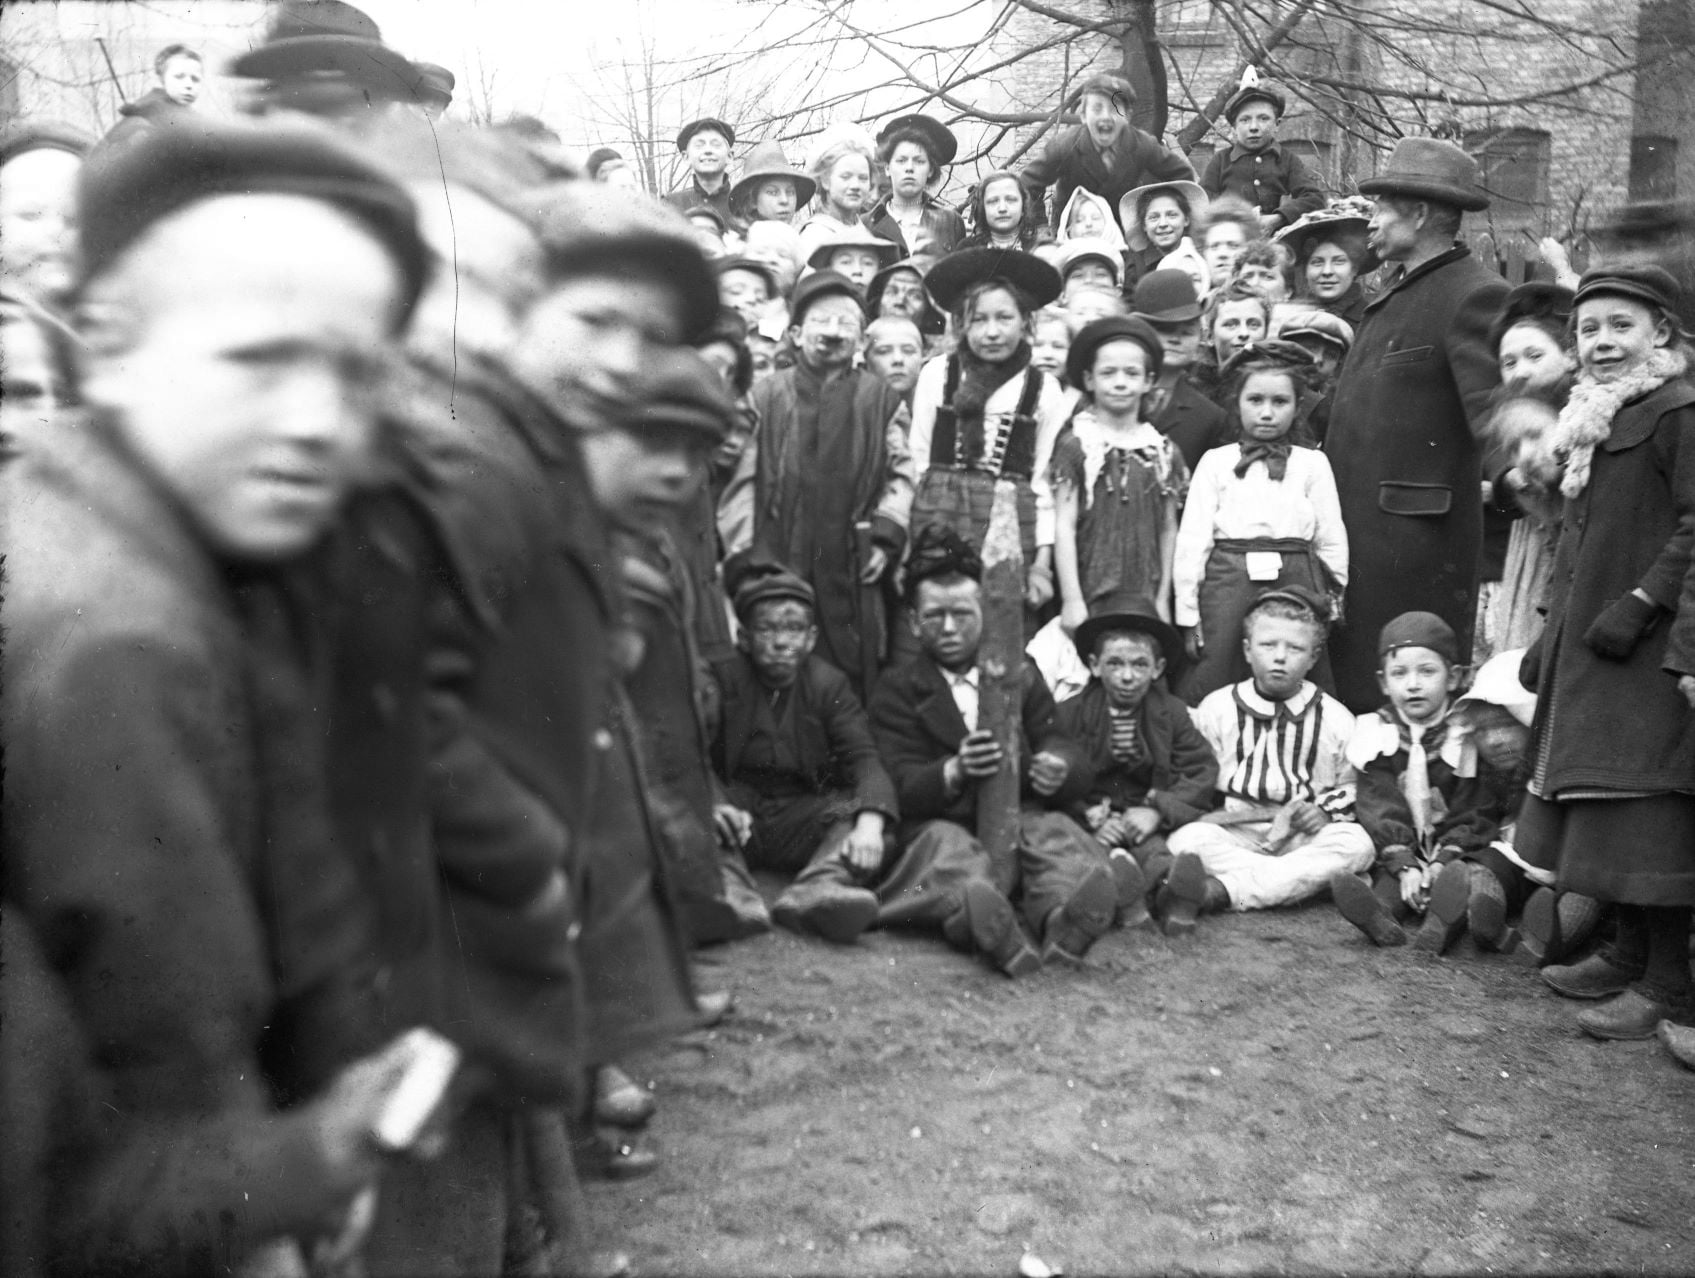 13897.8.3 Børnehjælpsdag, karneval cirka 1905